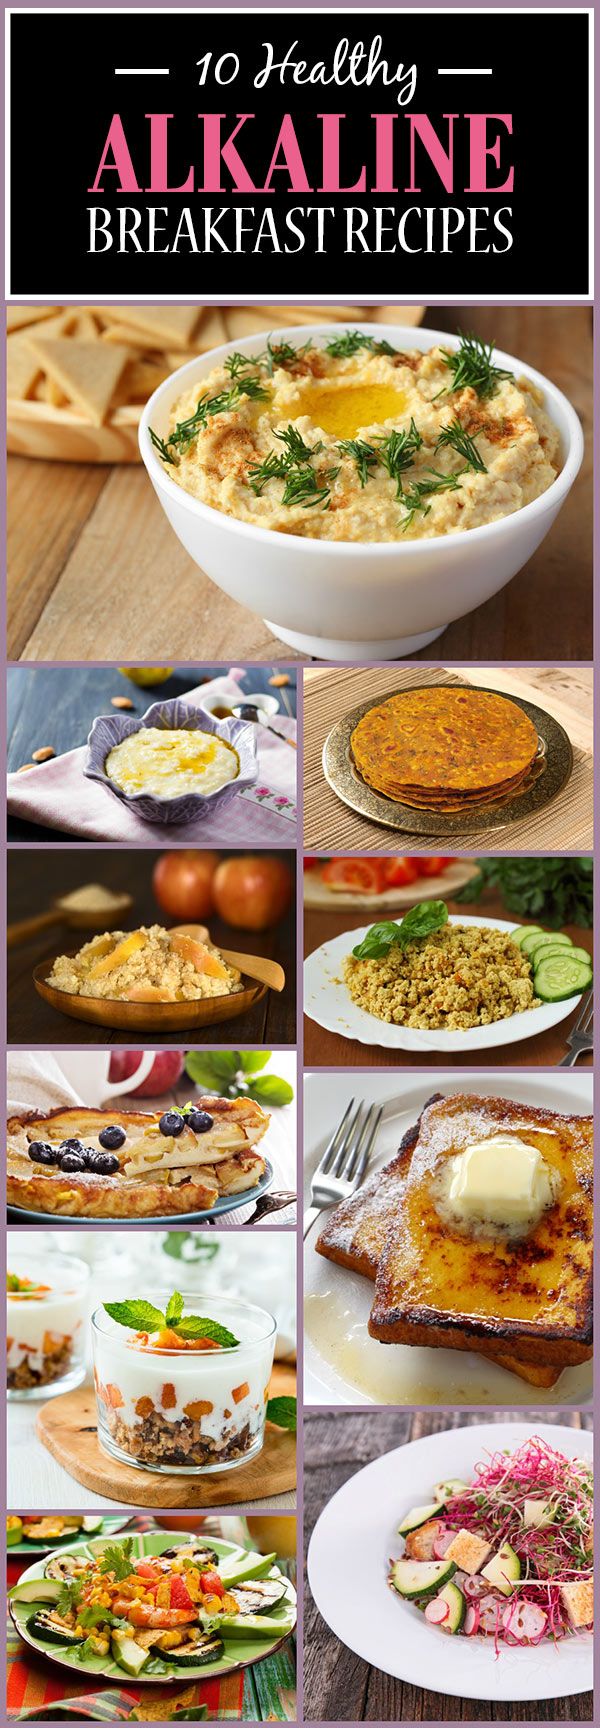 alkaline diet breakfast recipes